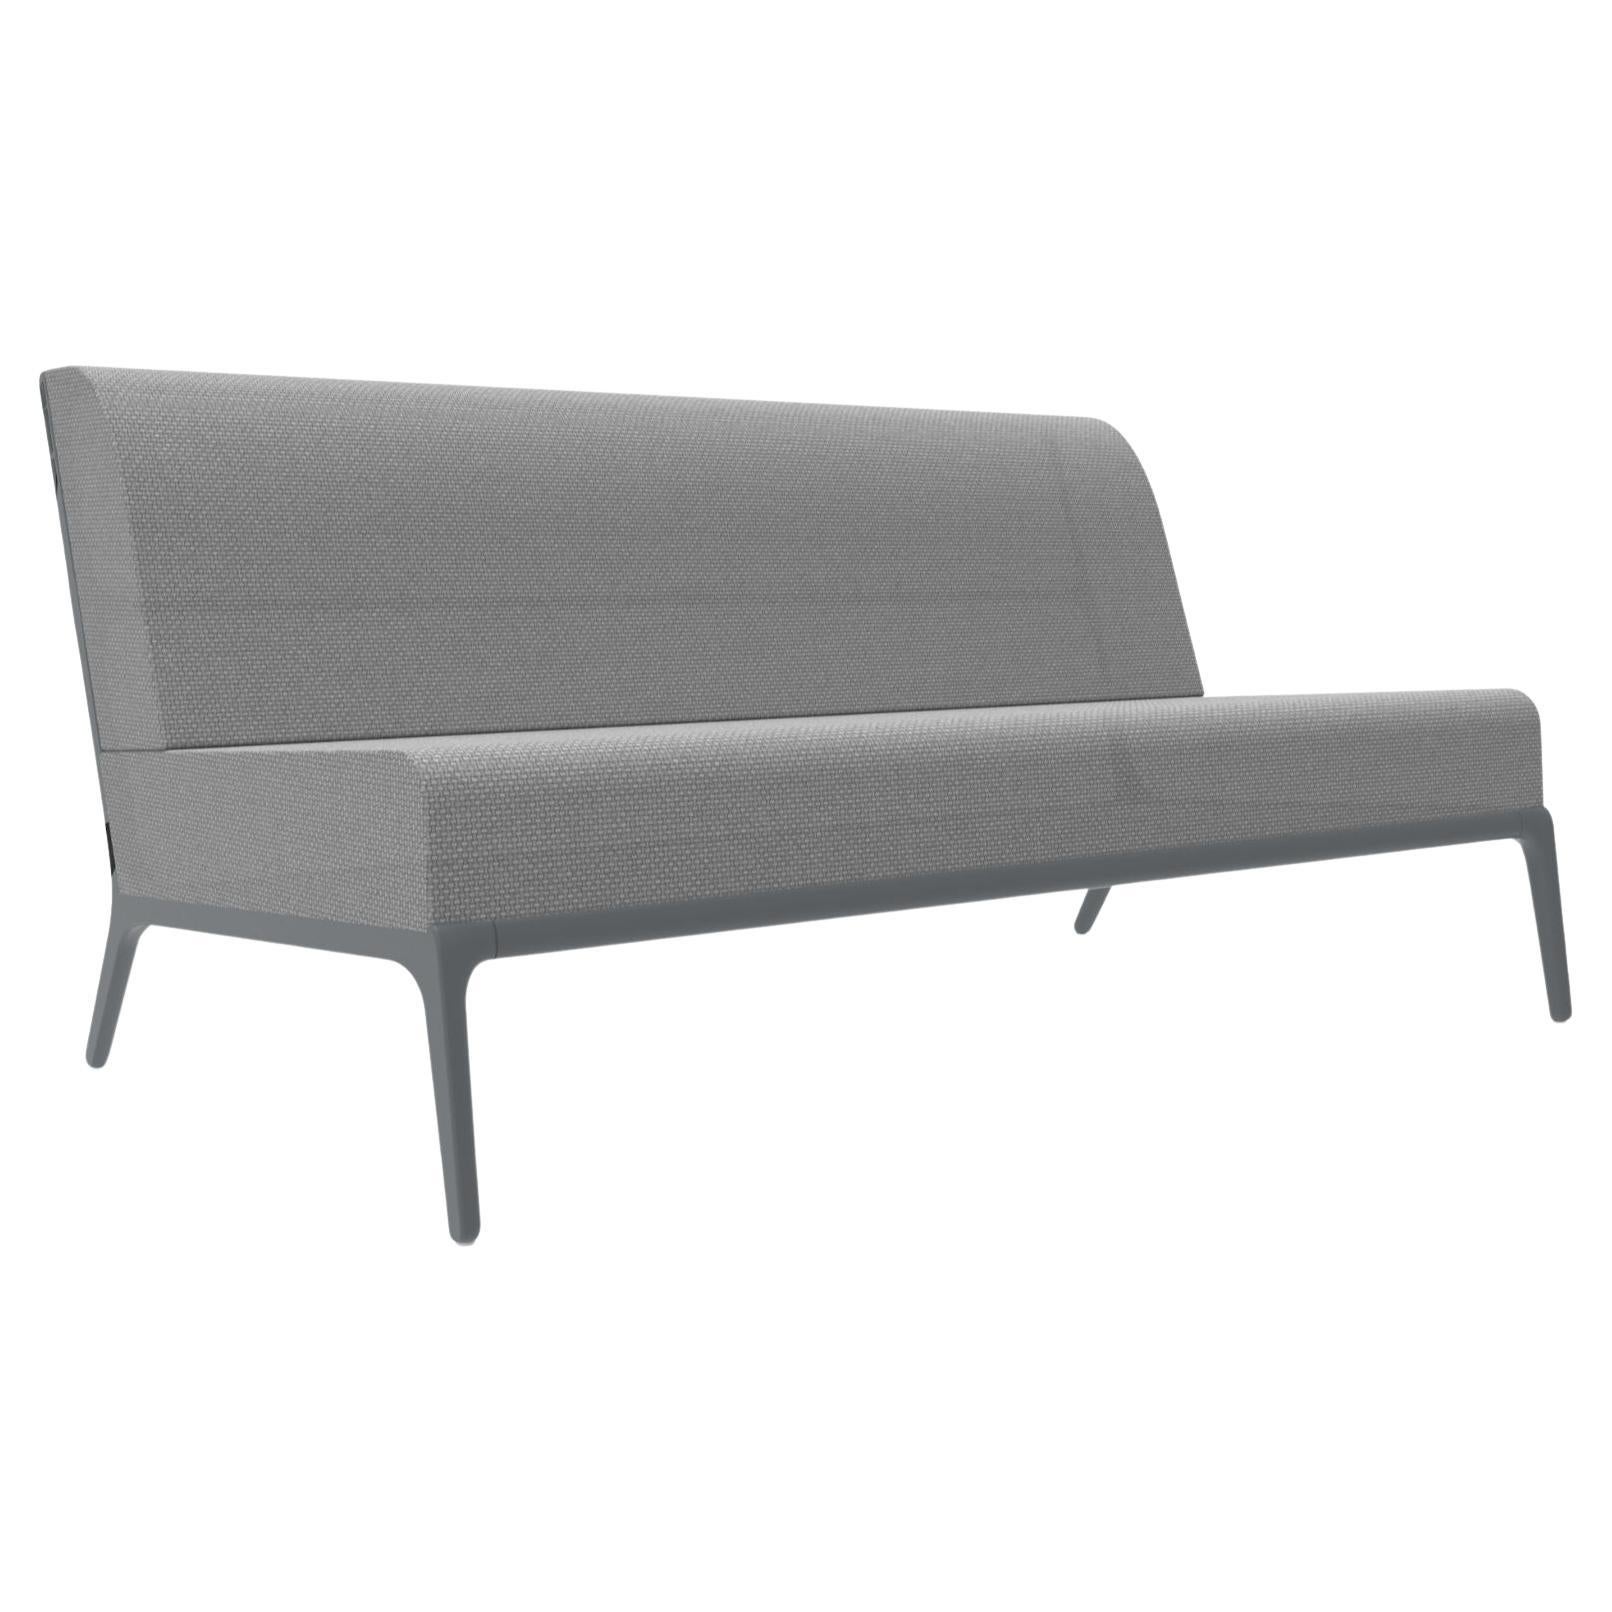 Xaloc Central 160 Grey Modular Sofa by Mowee For Sale